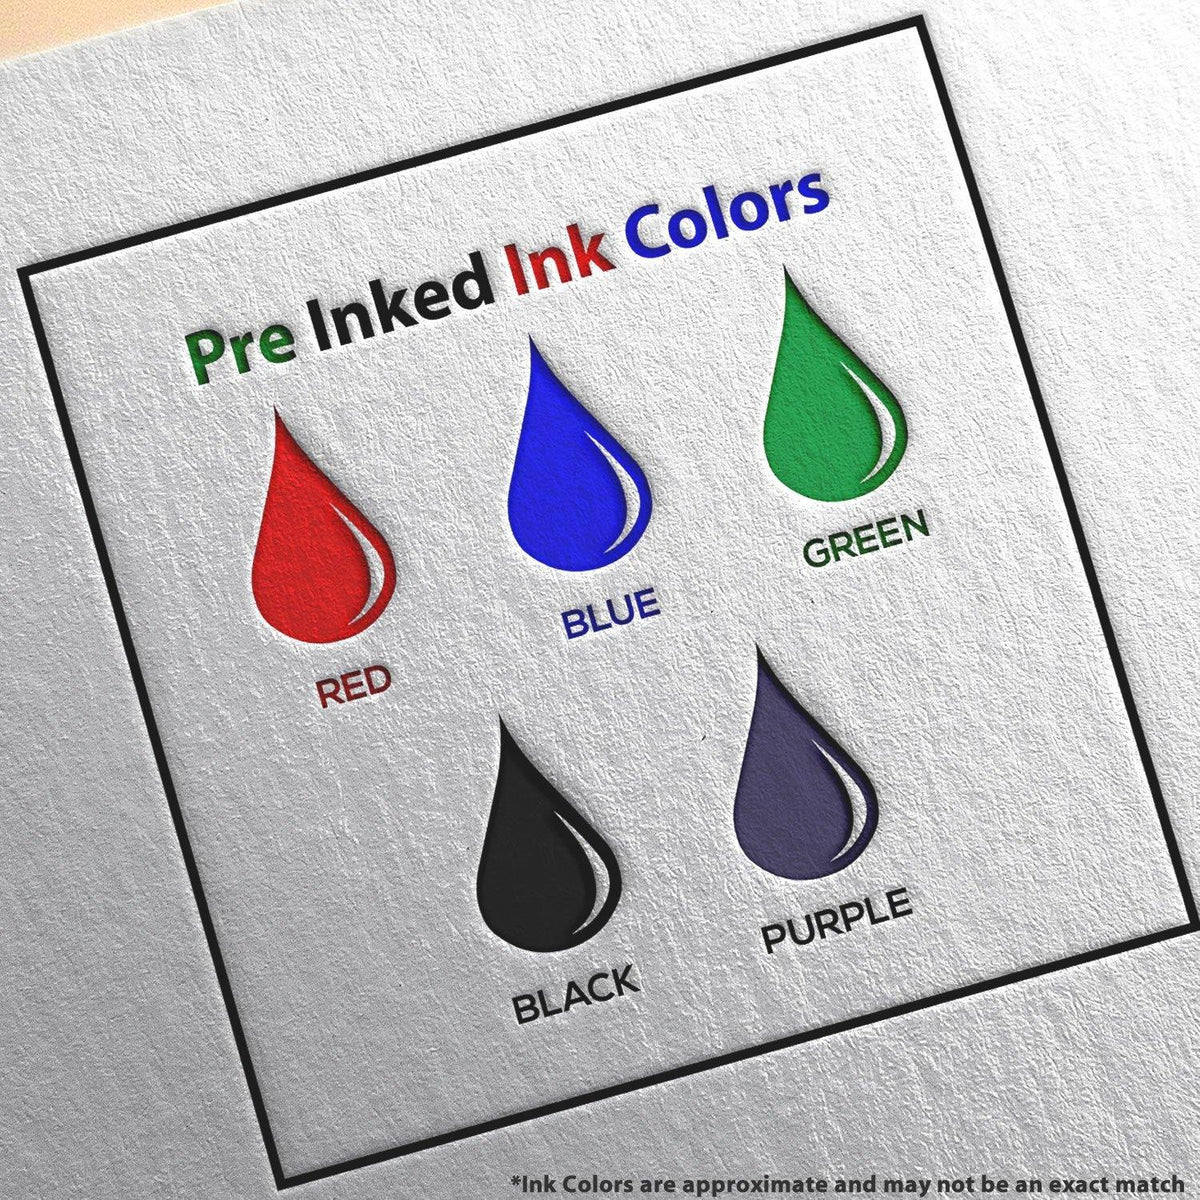 Large Pre Inked Deposition Exhibit Stamp Ink Color Options